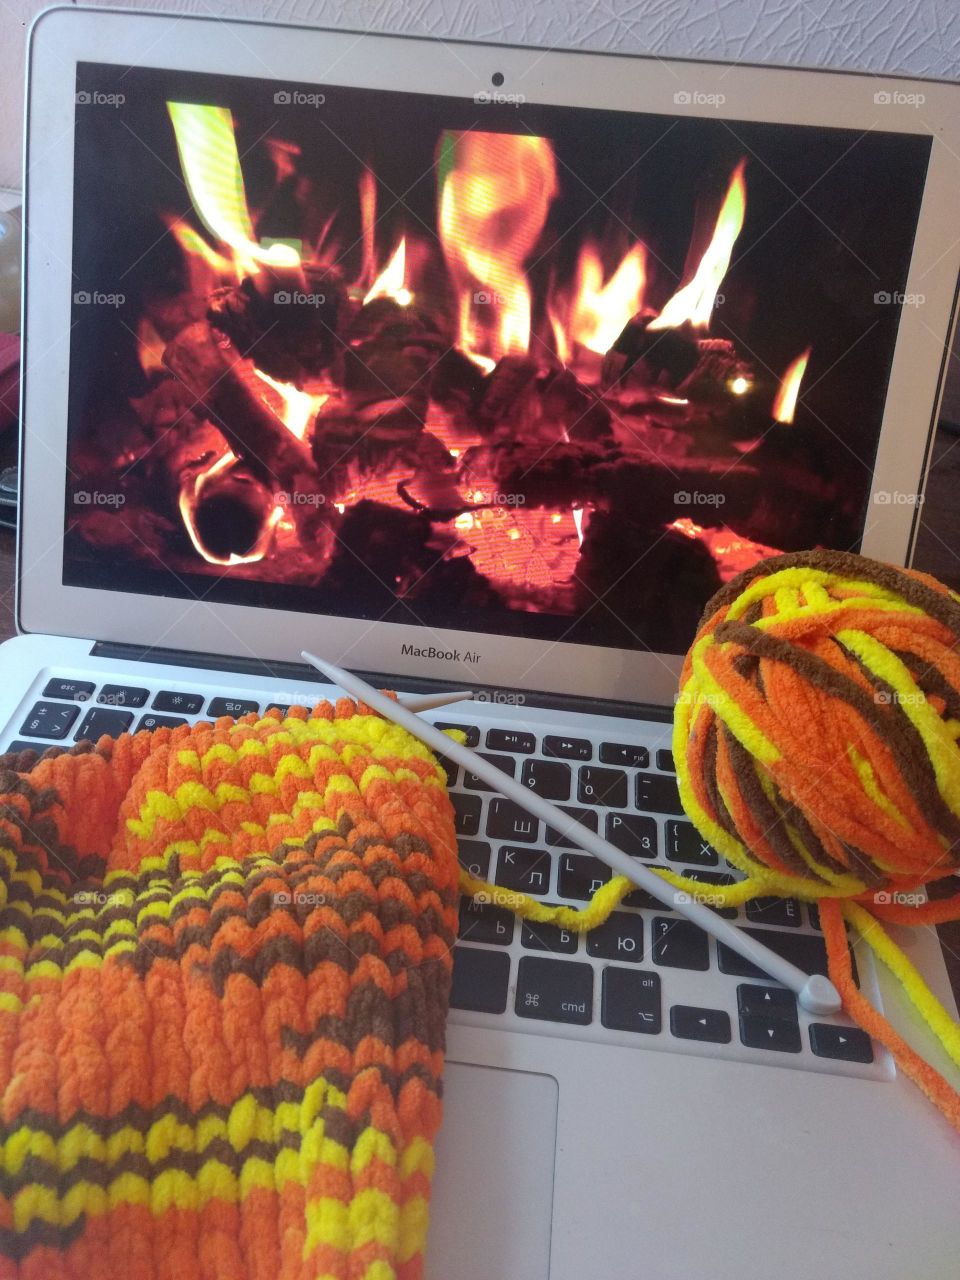 knitting, laptop, fireplace